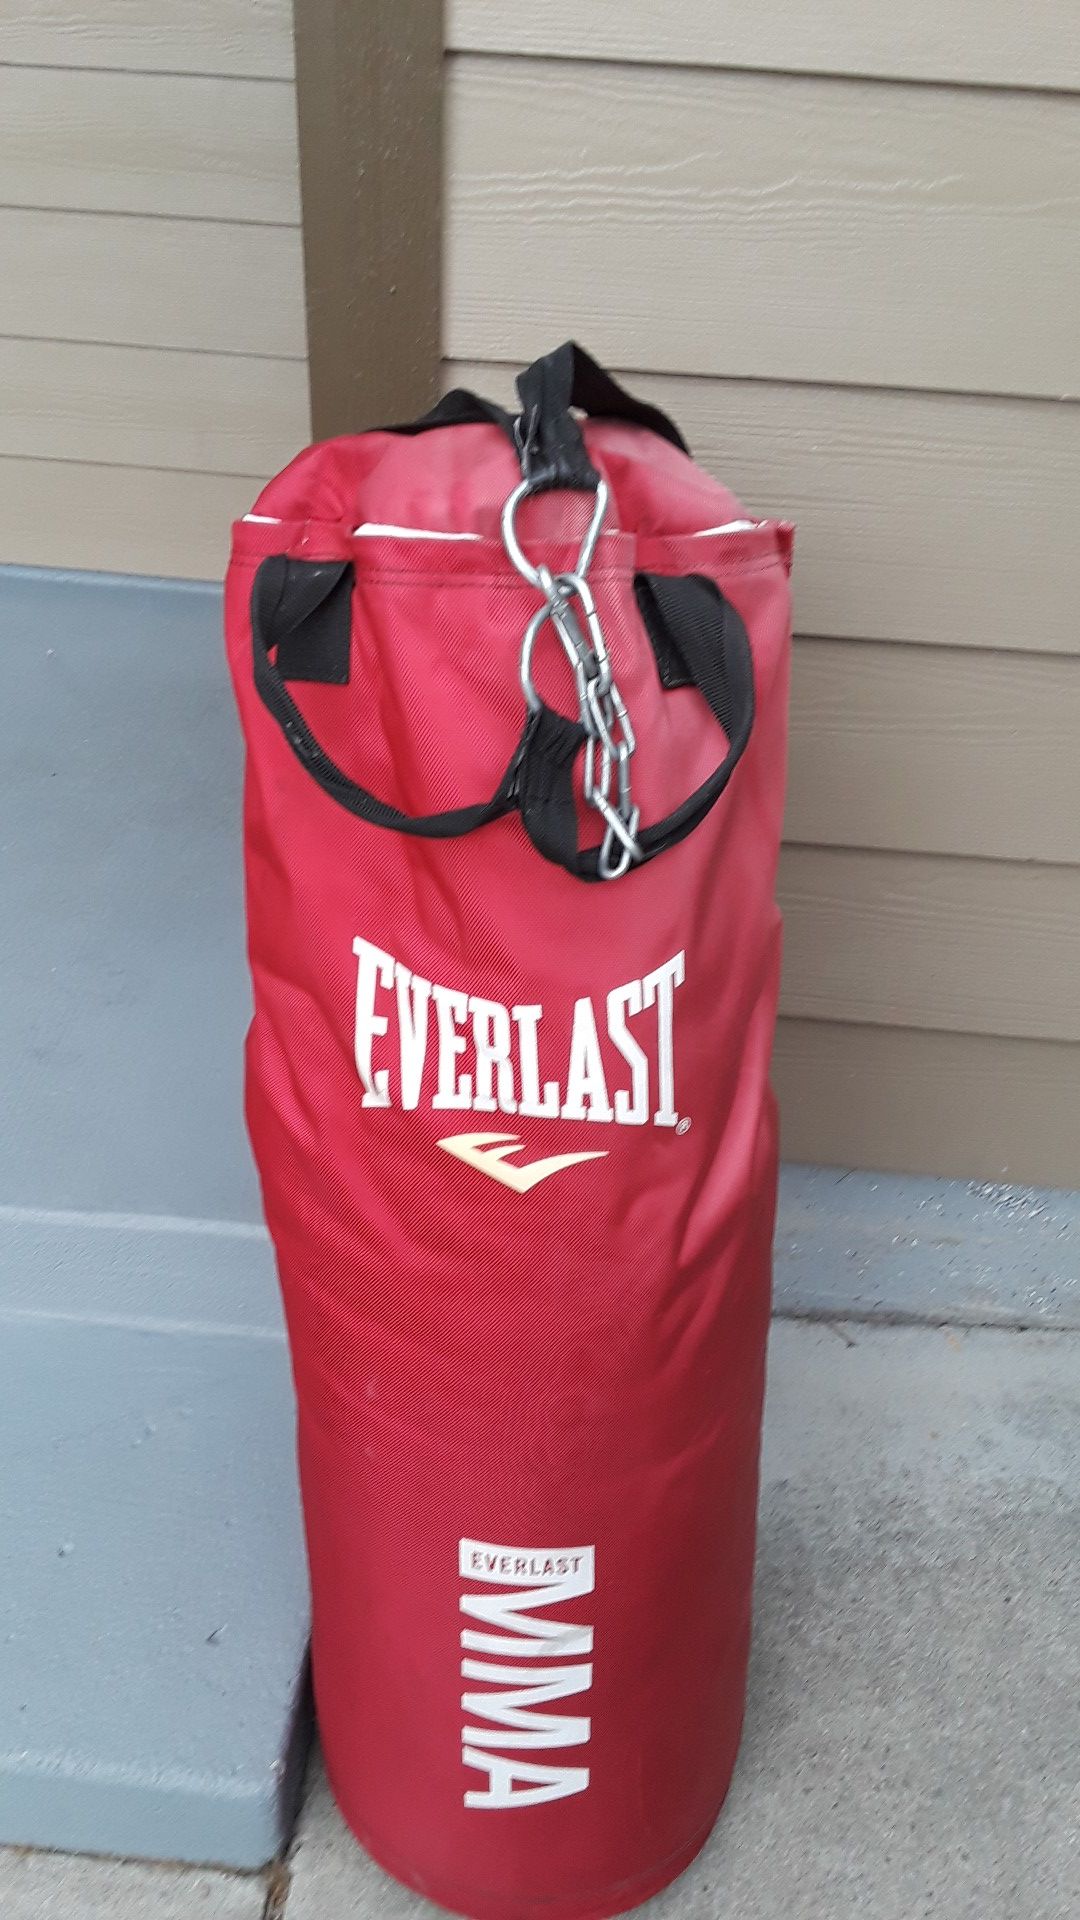 Everlast MMA punching/ kicking bag in decent shape. Very heavy